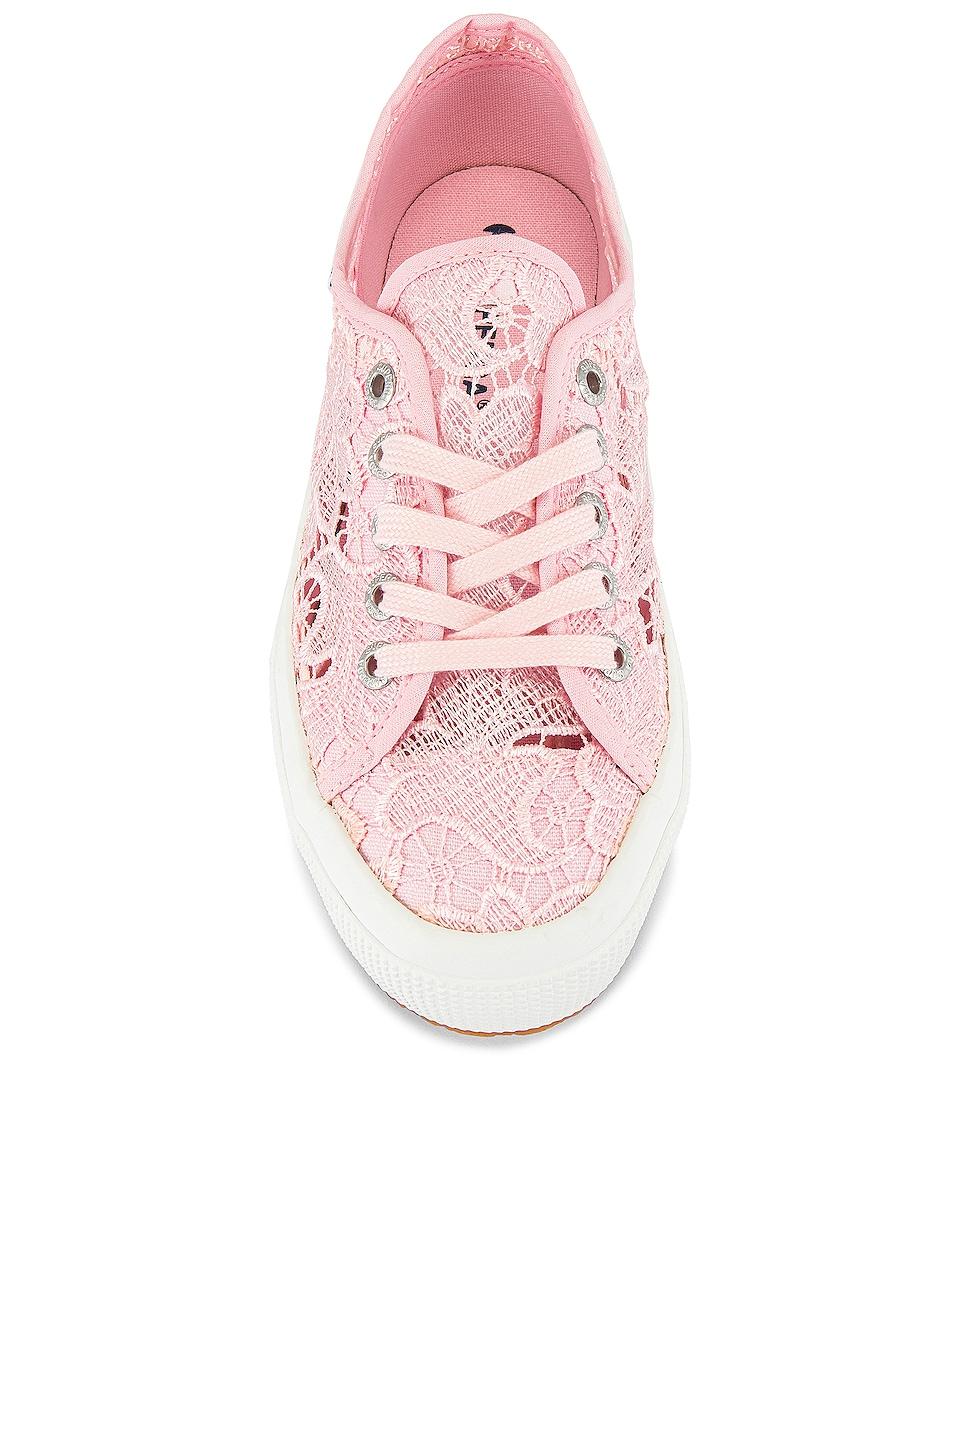 Superga 2750 Macrame Sneaker in Pink - Lyst